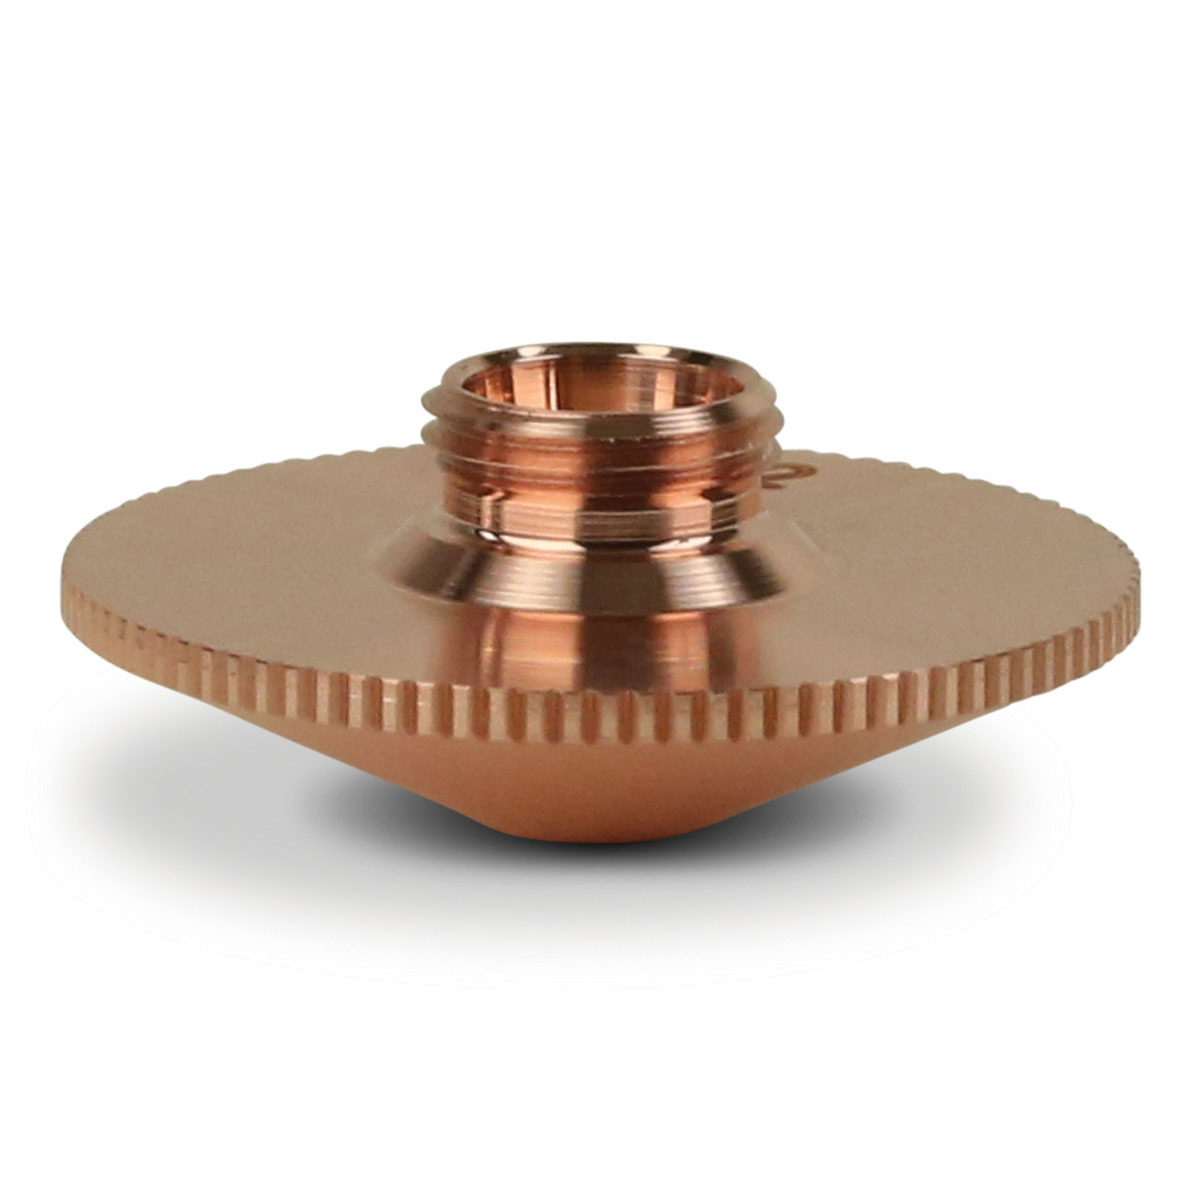 RADNOR™ 1.2 mm Copper Nozzle For Trumpf® CO2 Laser To RAD64008093 for sale online at autumn supply